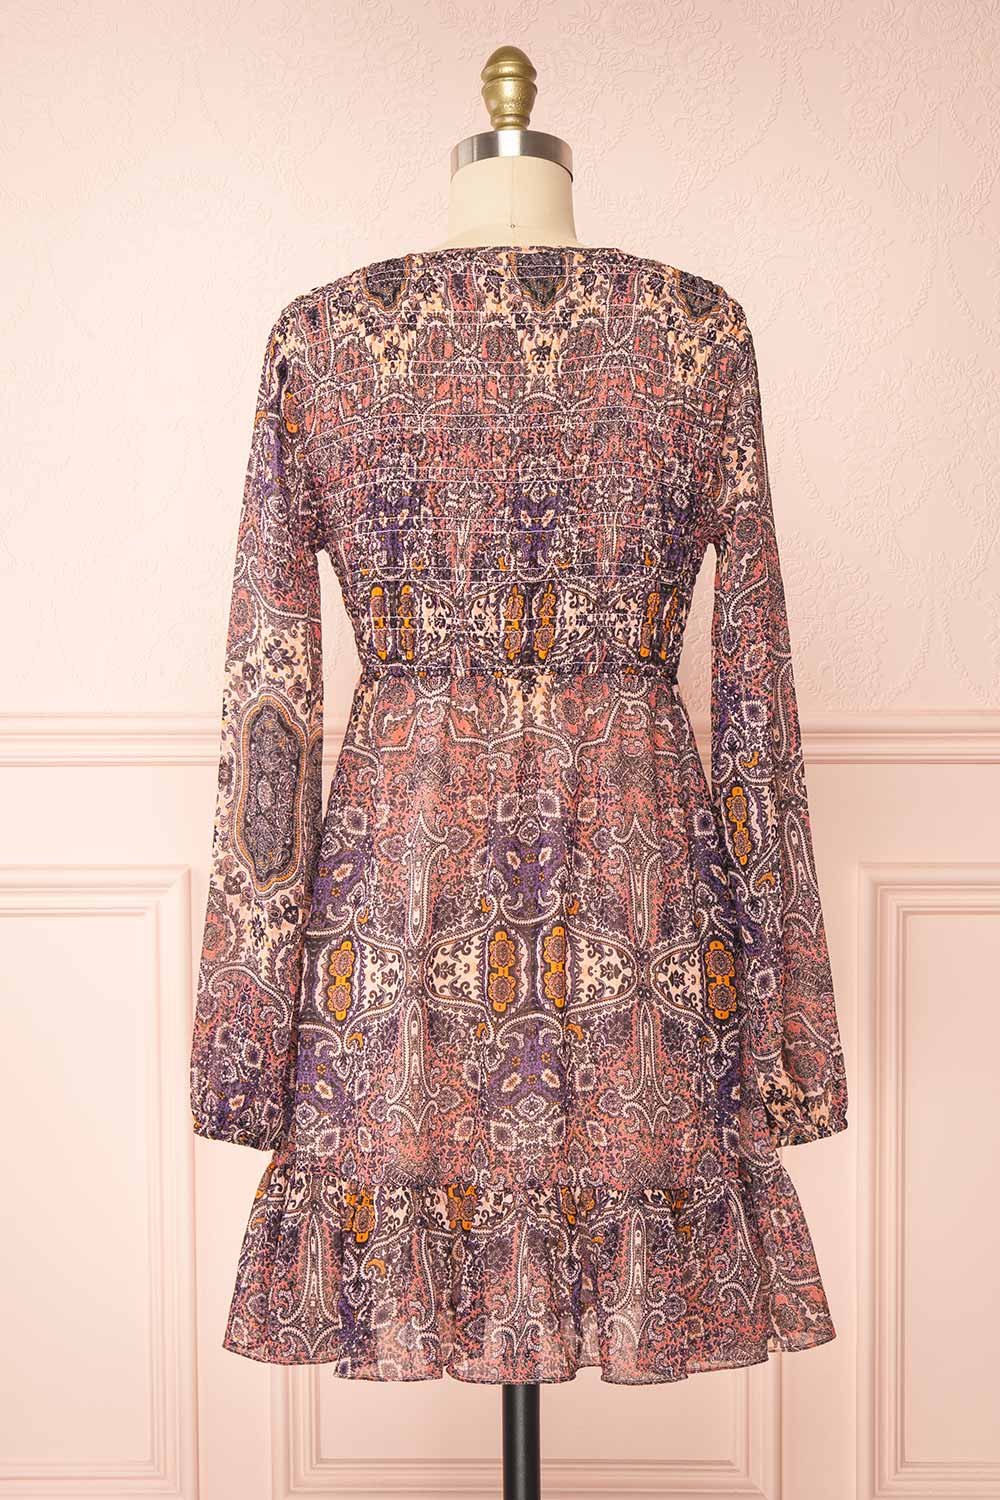 Kissiae Short Paisley Pattern Chiffon Dress | Boutique 1861 back view